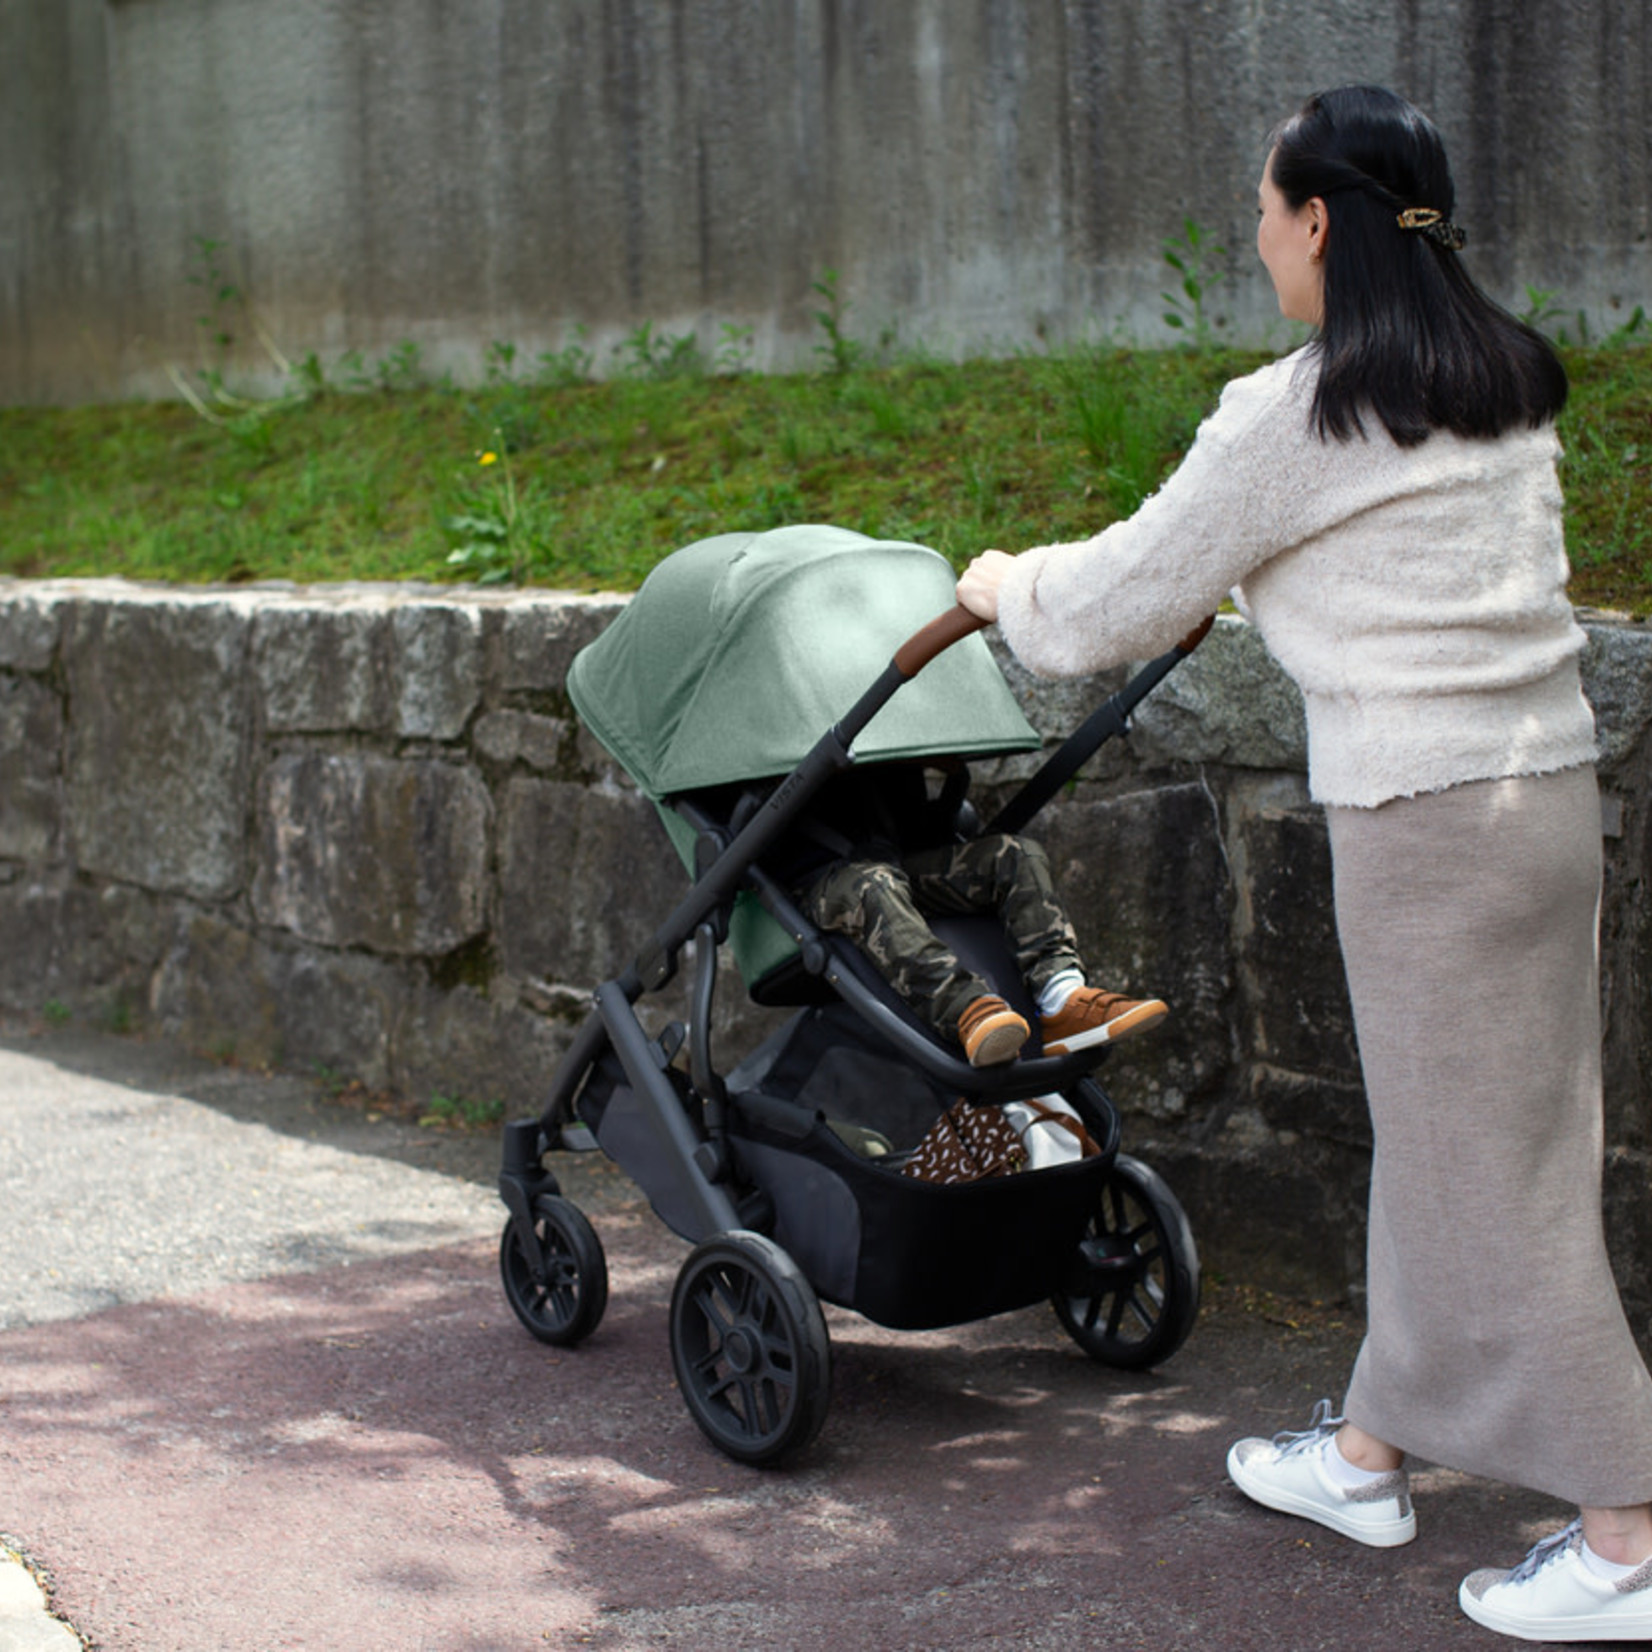 Vista V2  UPPAbaby - ES Baby Strollers